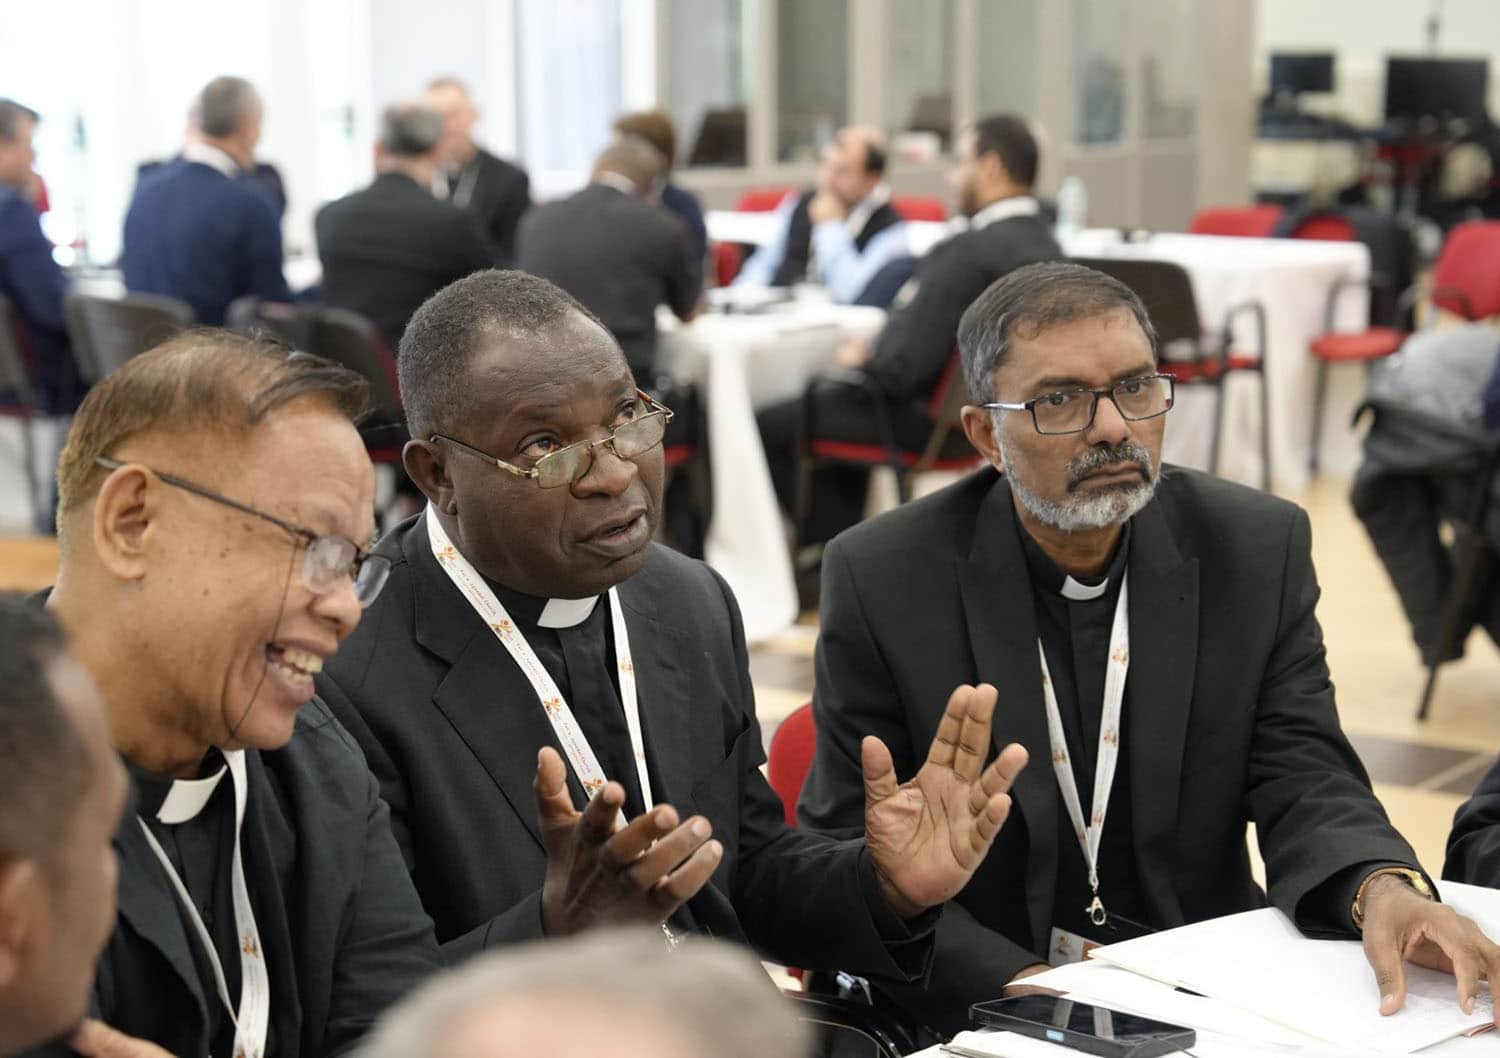 PARISH PRIESTS' SYNOD MEETING